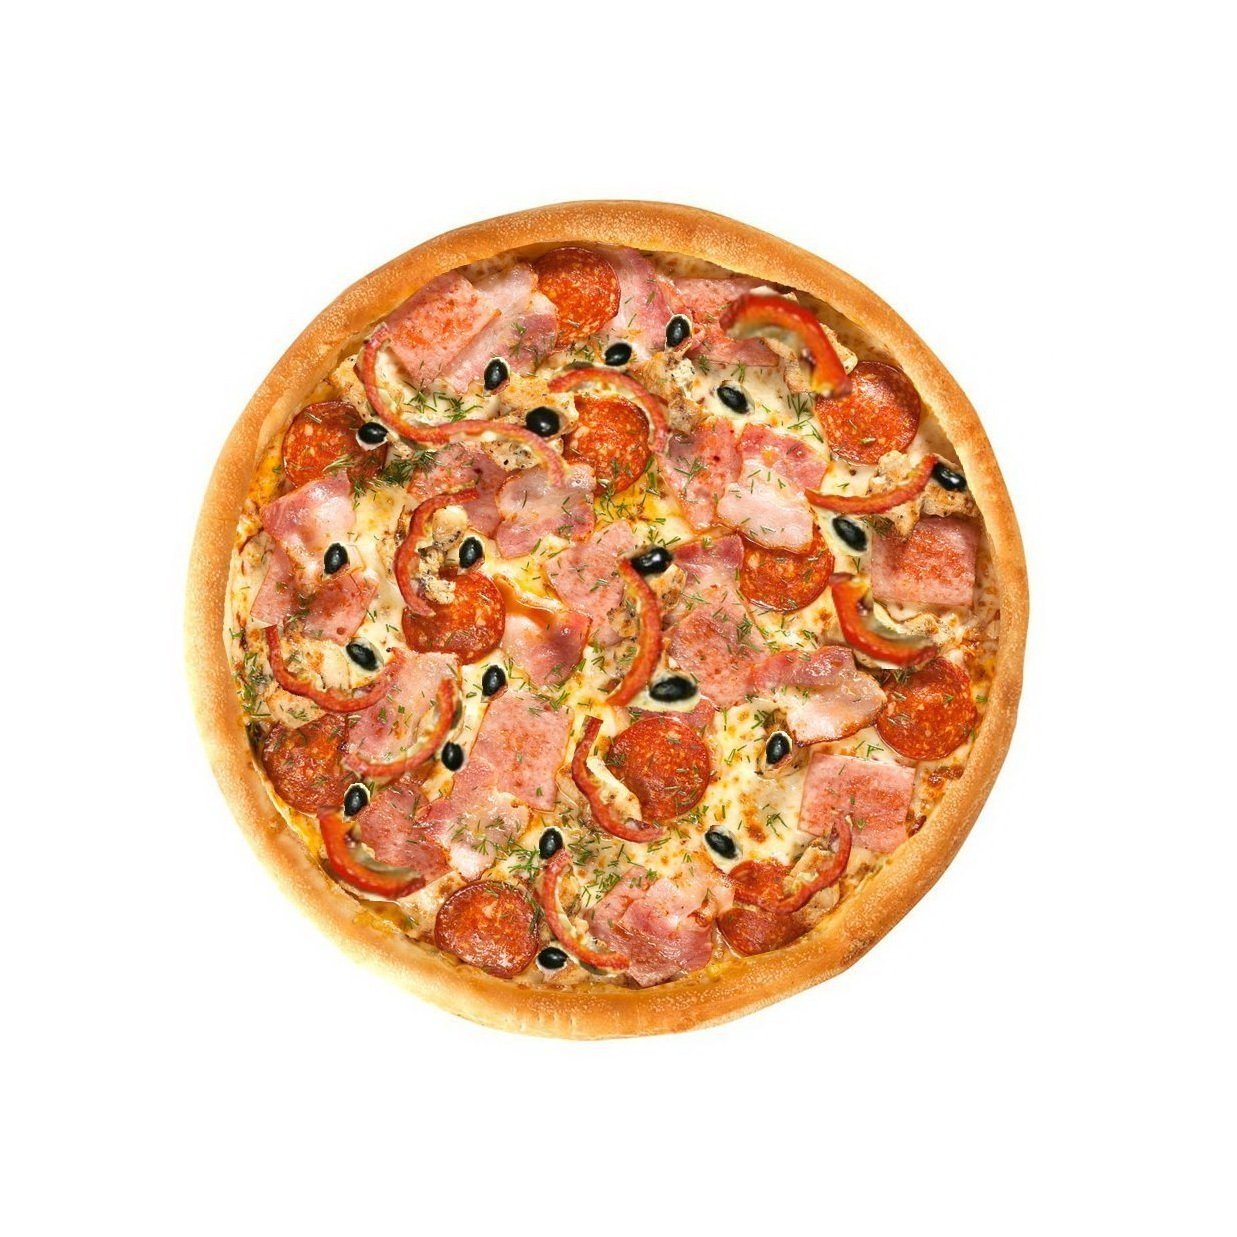 пепперони пицца фото на белом фоне фото 50